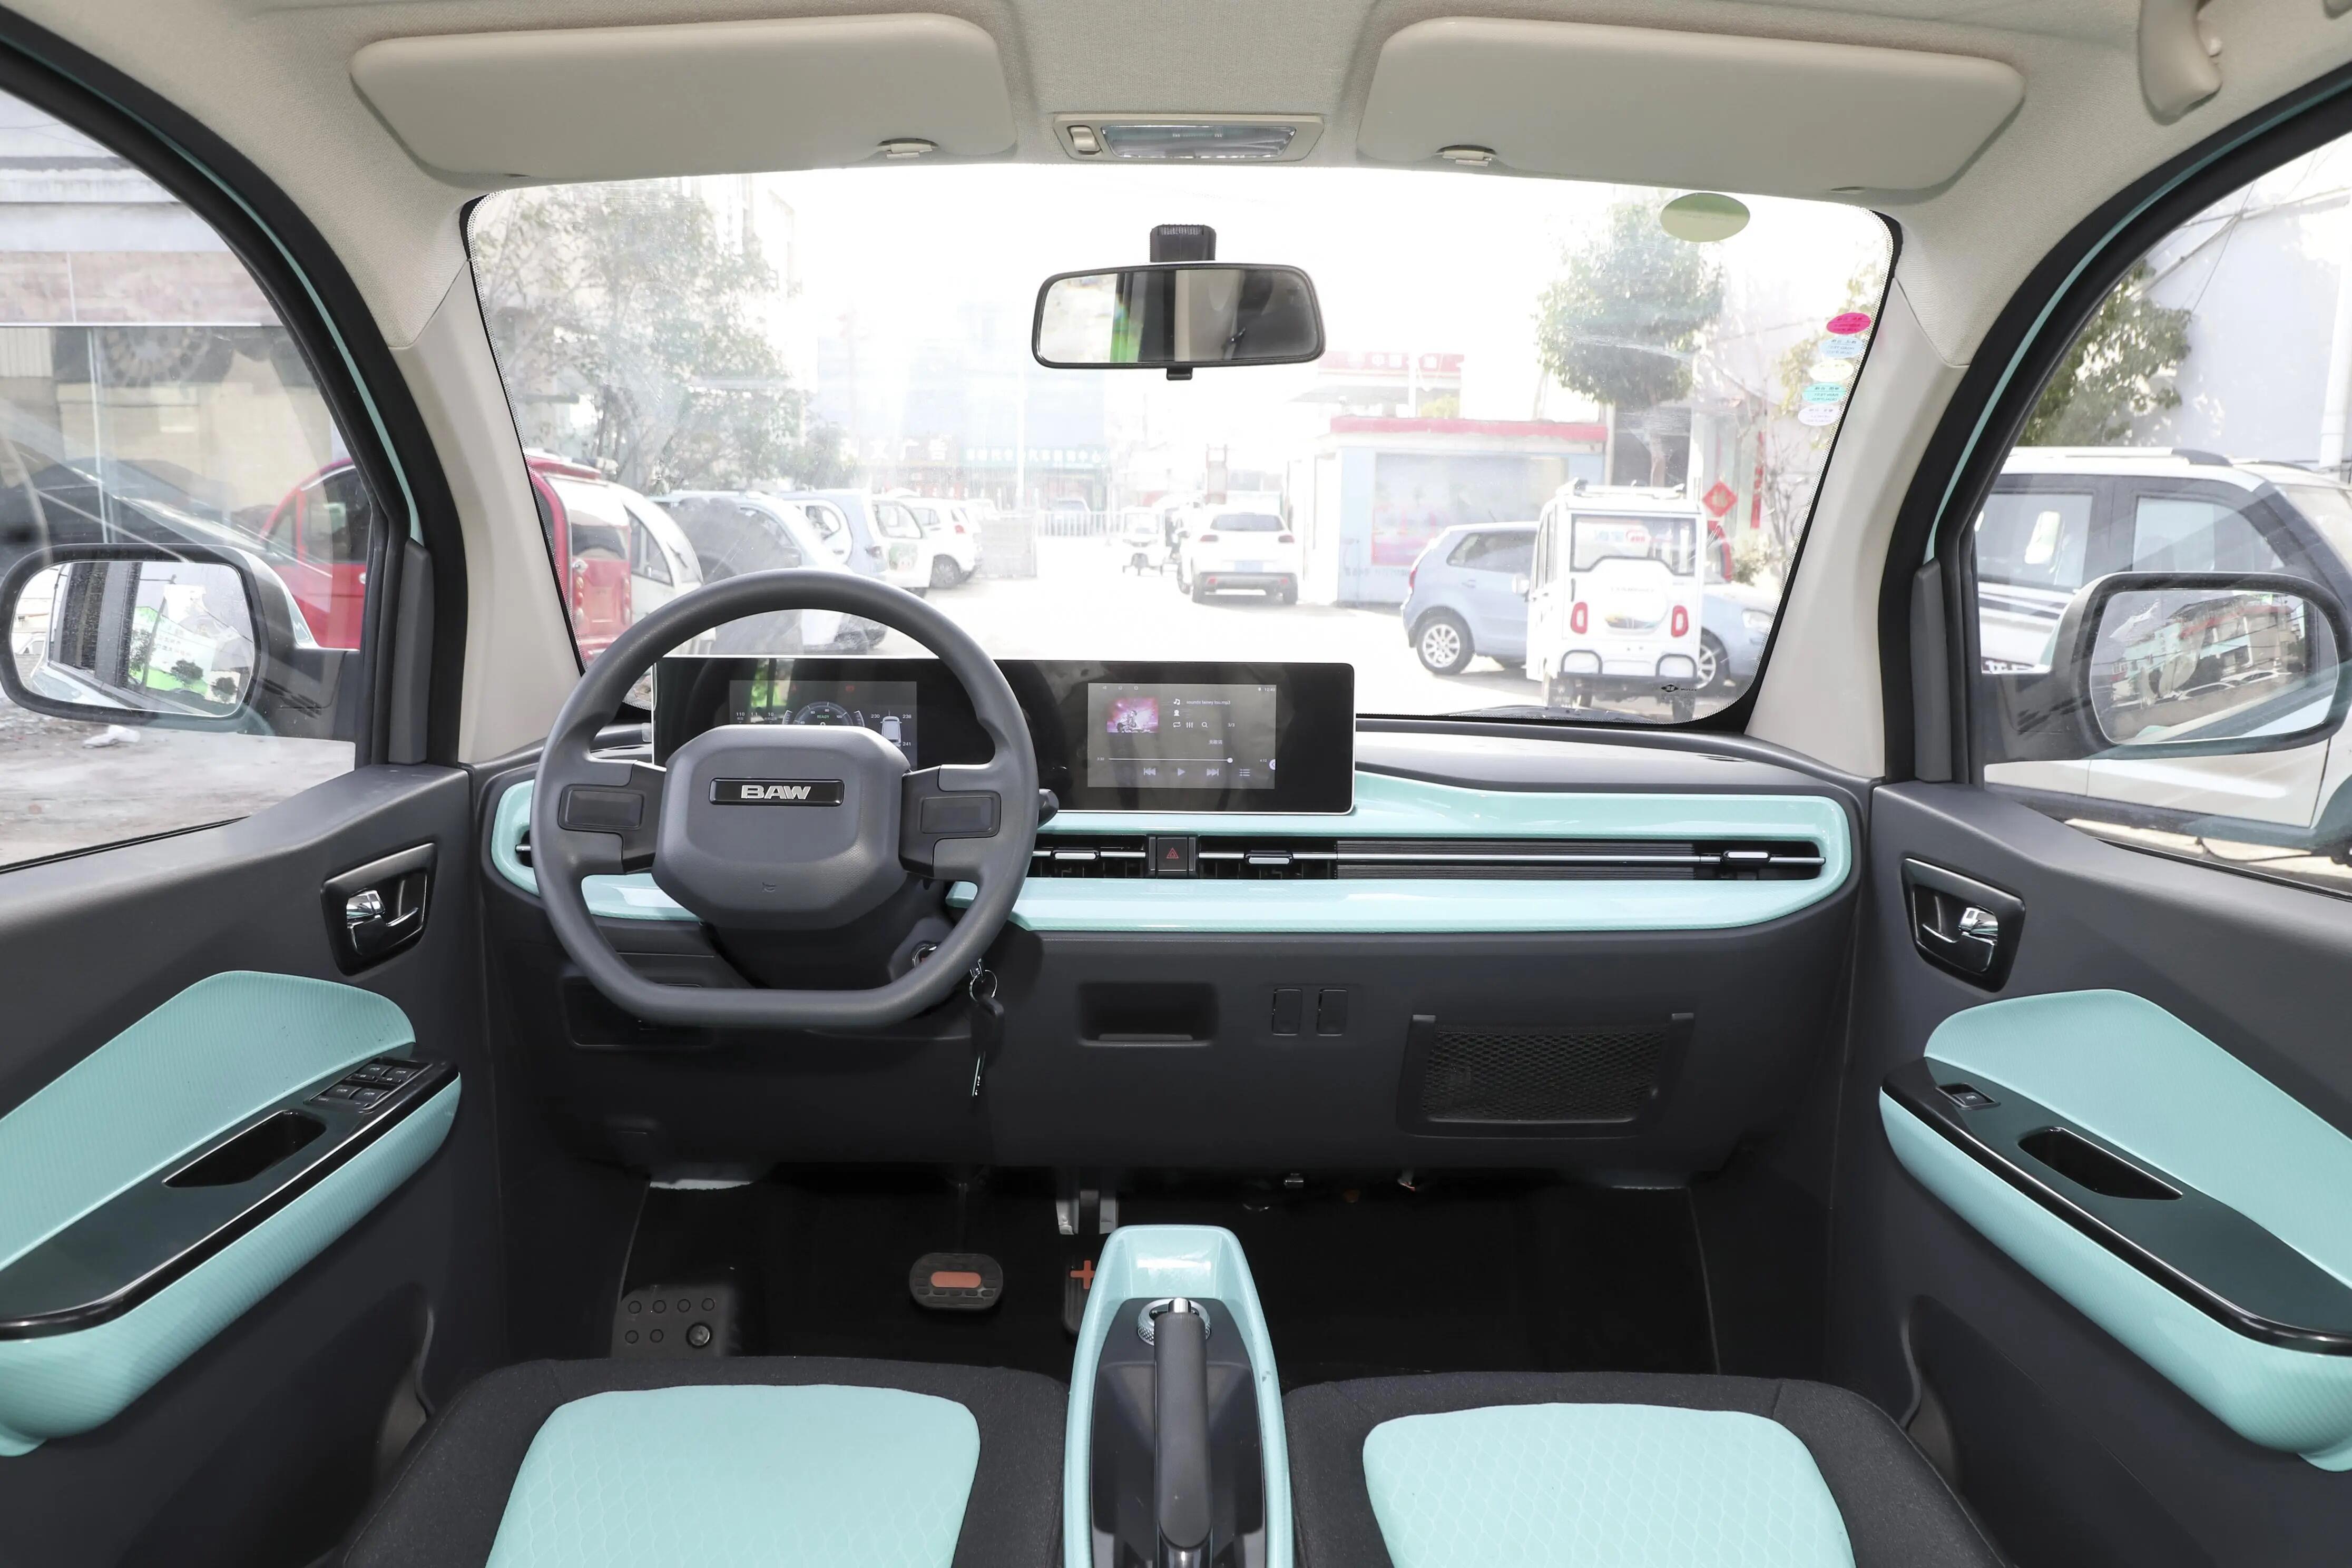 2023 Mini BAIC Jia Bao New Energy Vehicle Eco-friendly transportation solution electric MINI used car for adult supplier